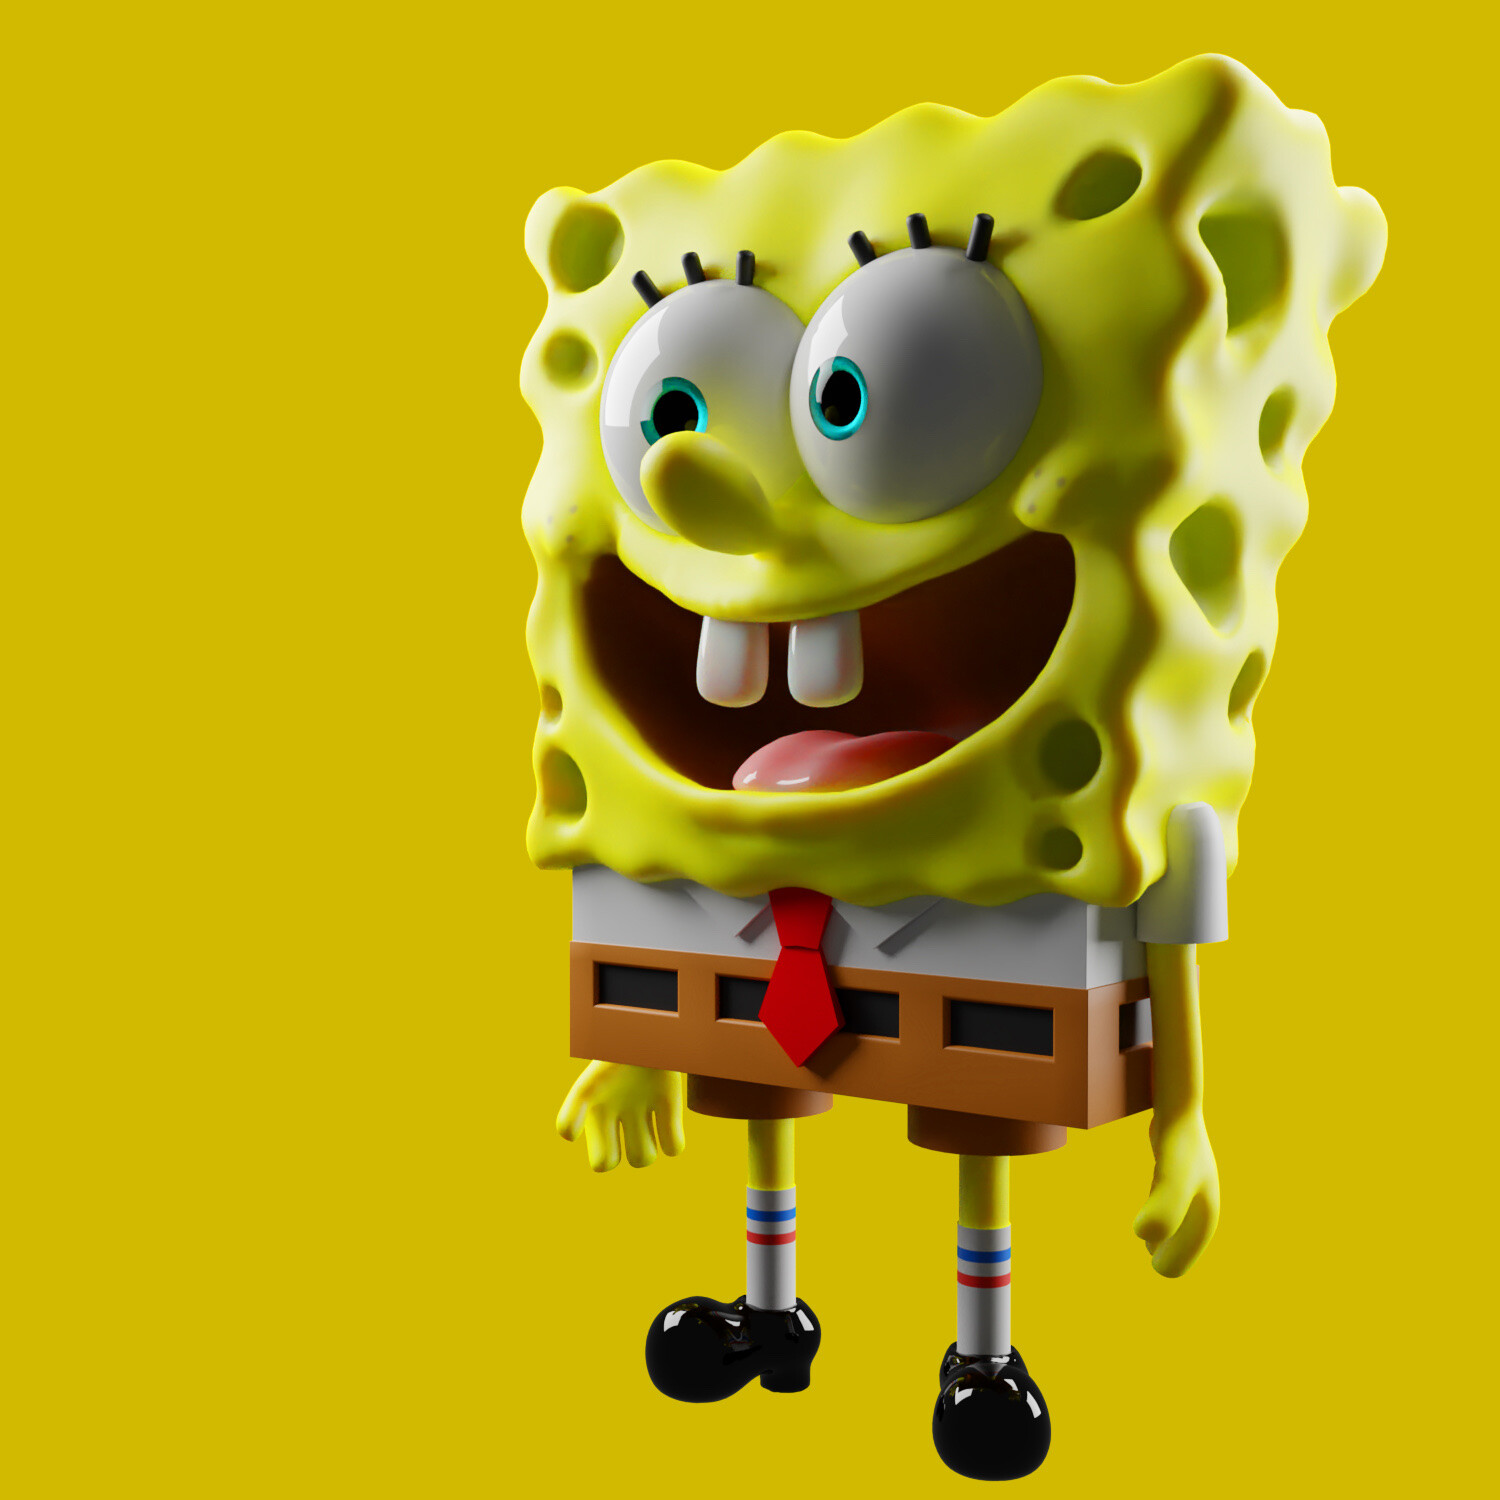 ArtStation - Sponge bob